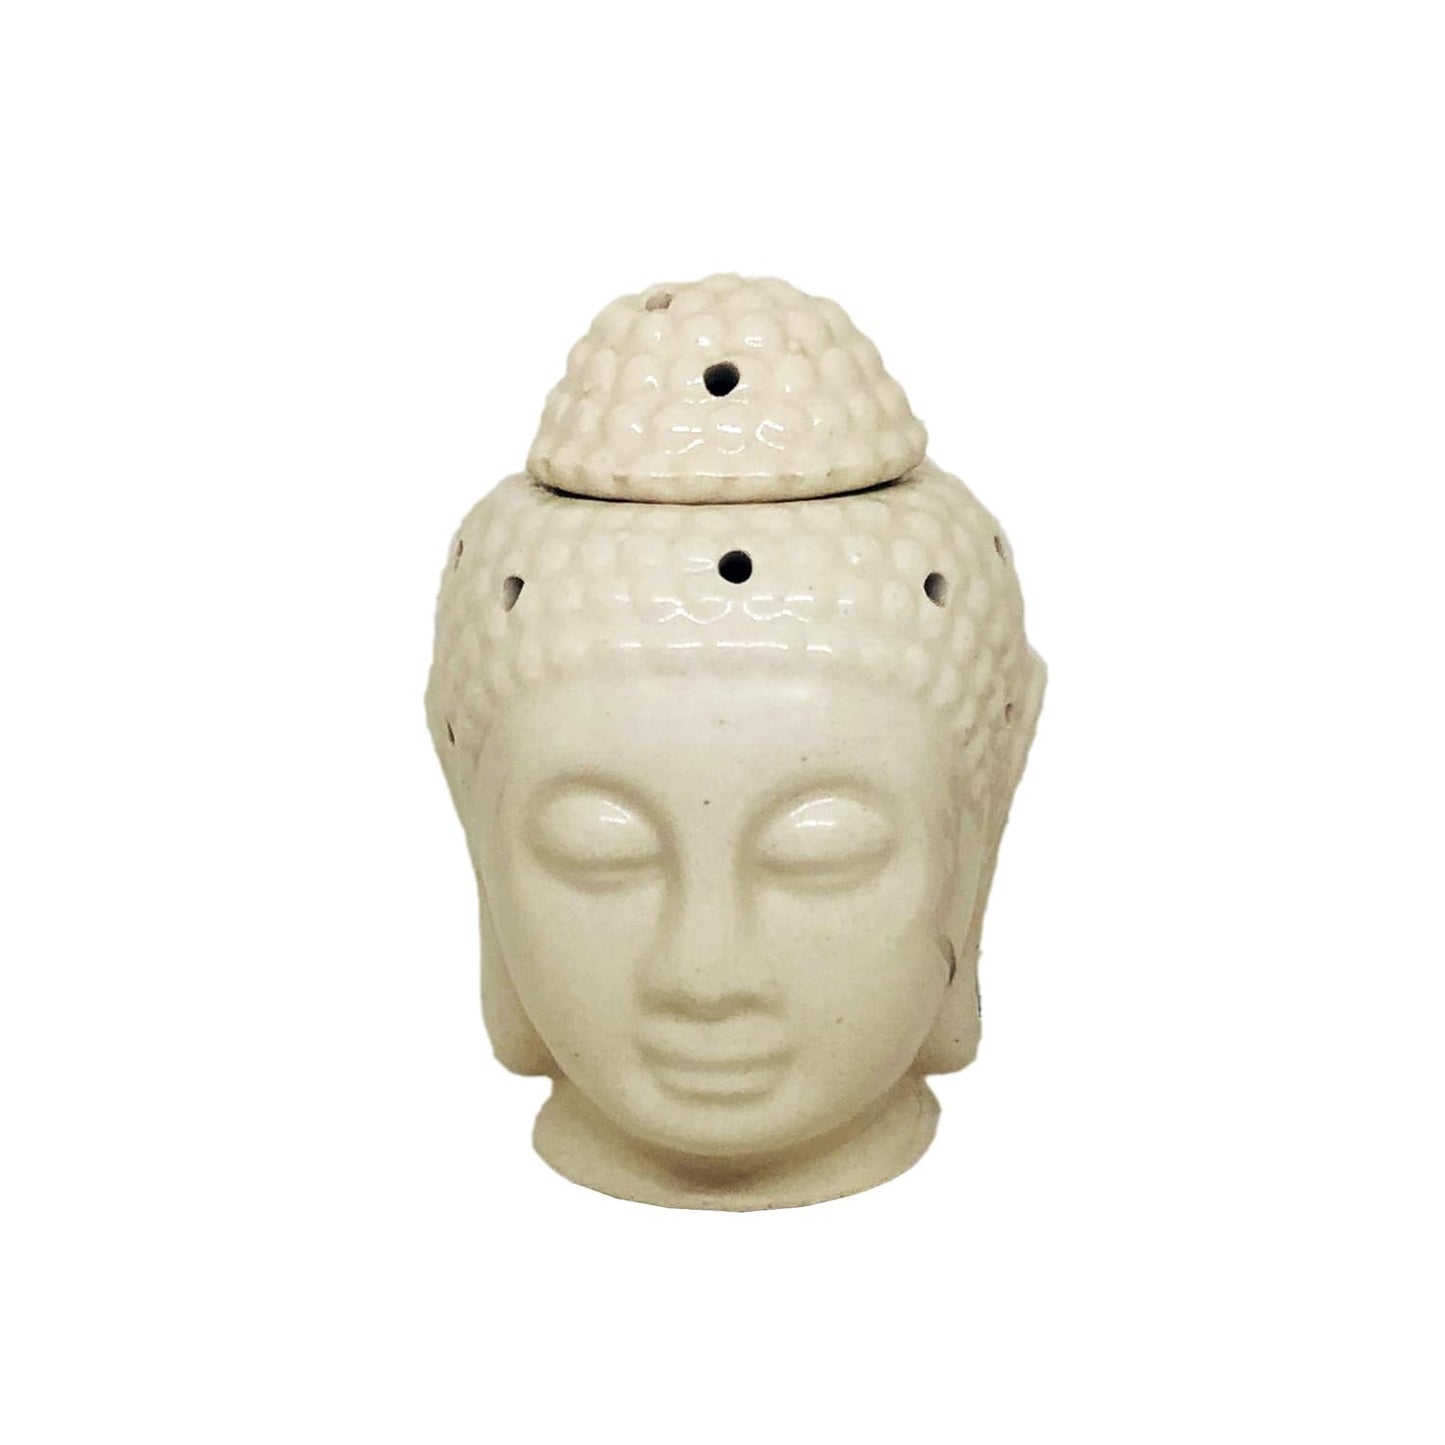 Exclusive Electric Ceramic Buddha Aroma Oil Diffuser set of 1